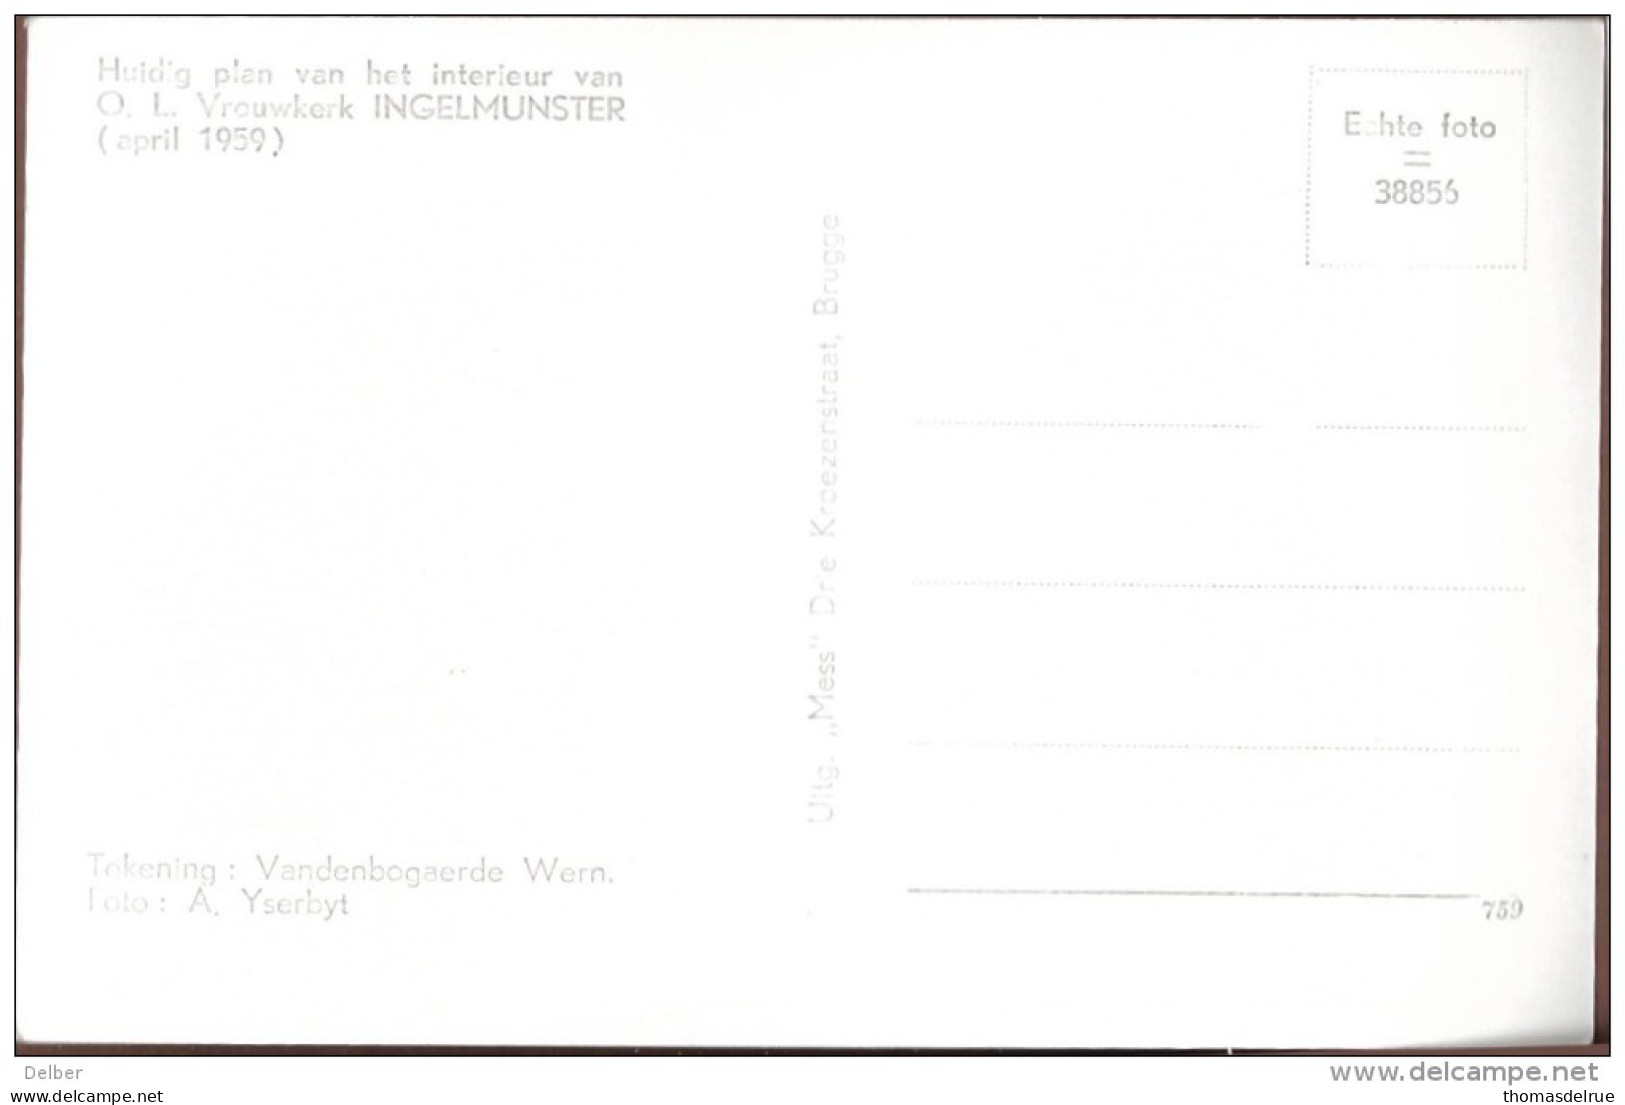 _6ik-900: Huidig Plan Van Het Interieur Van O.L.Vrouwkerk INGELMUNSTER (april 1959) Van De Bogaerde Werner... - Ingelmunster